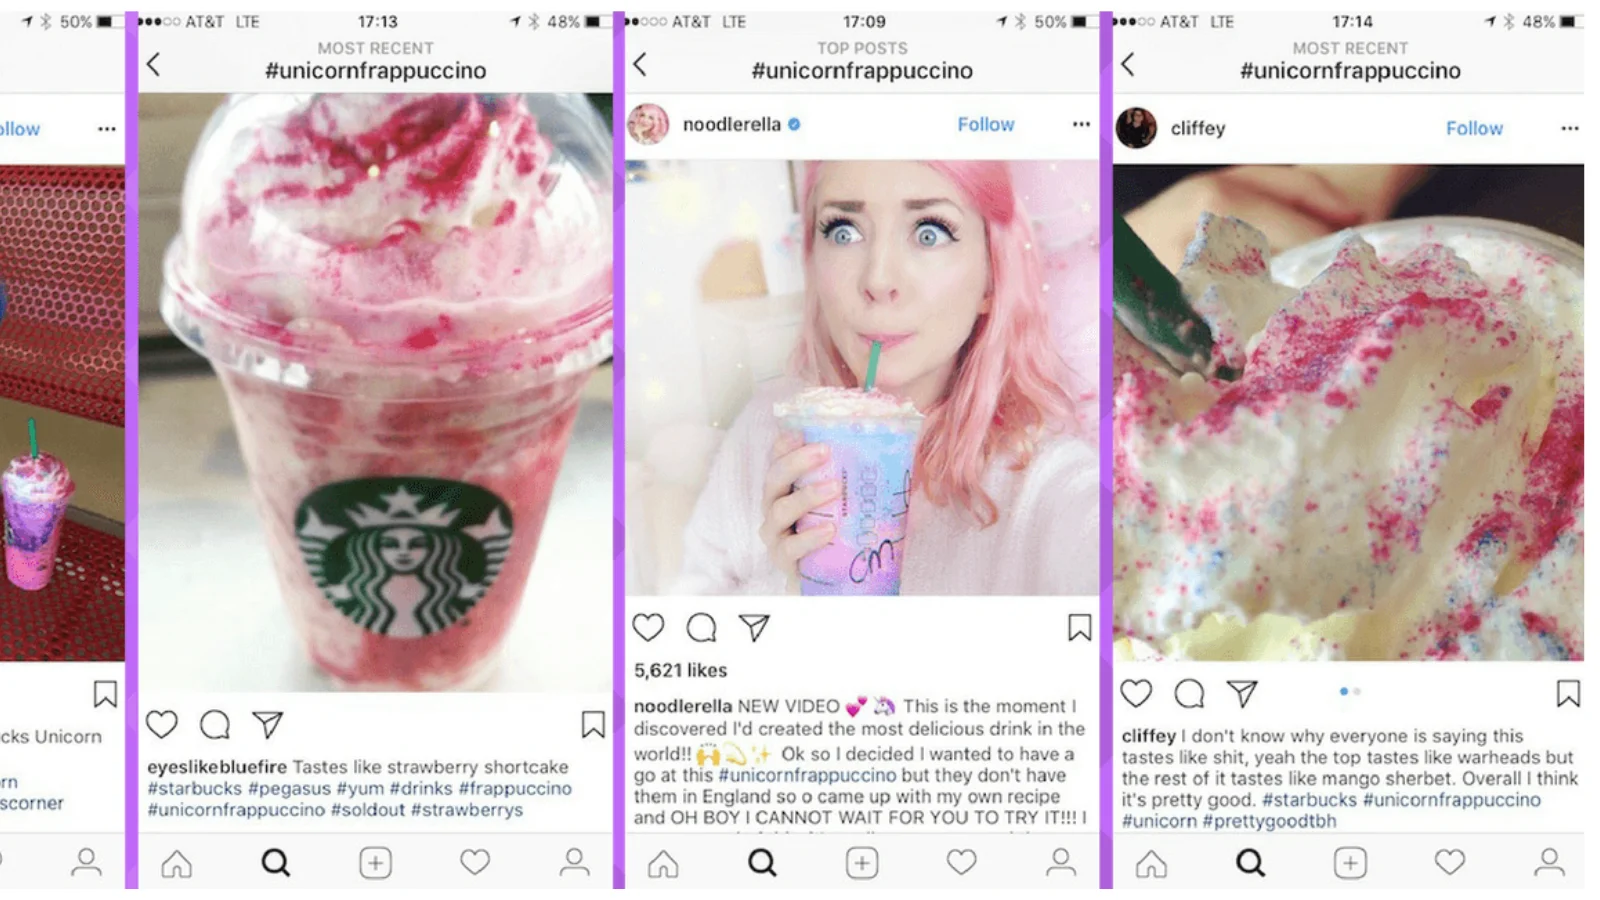 marketing-campaigns-examples-like-starbucks-the-unicorn-frappuccino